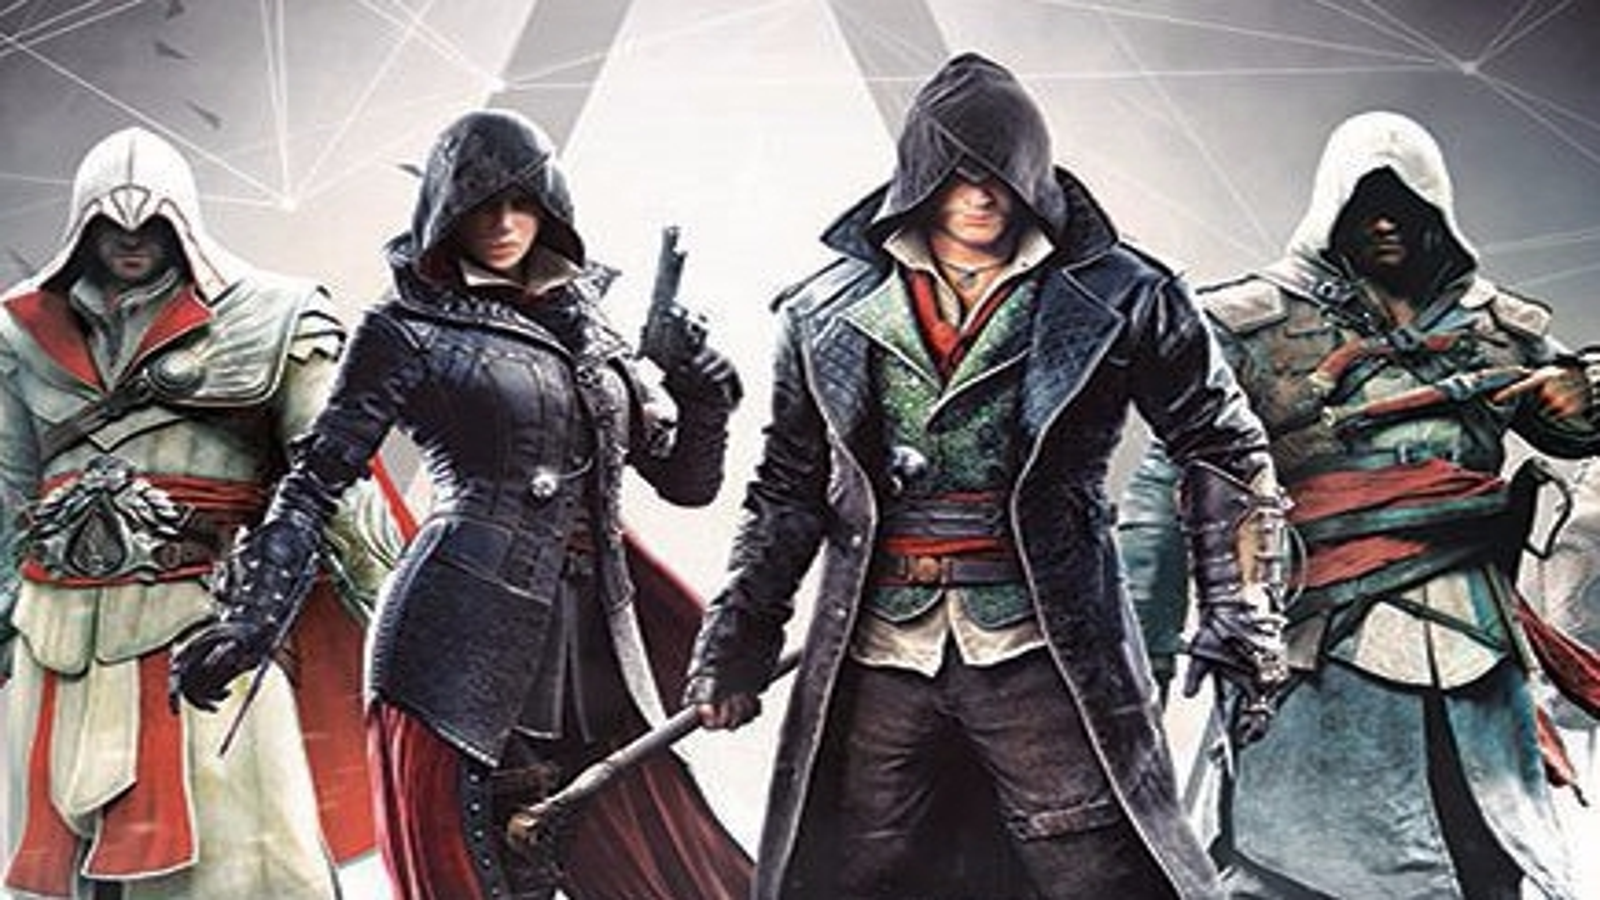 Main story, Assassin's Creed Revelations